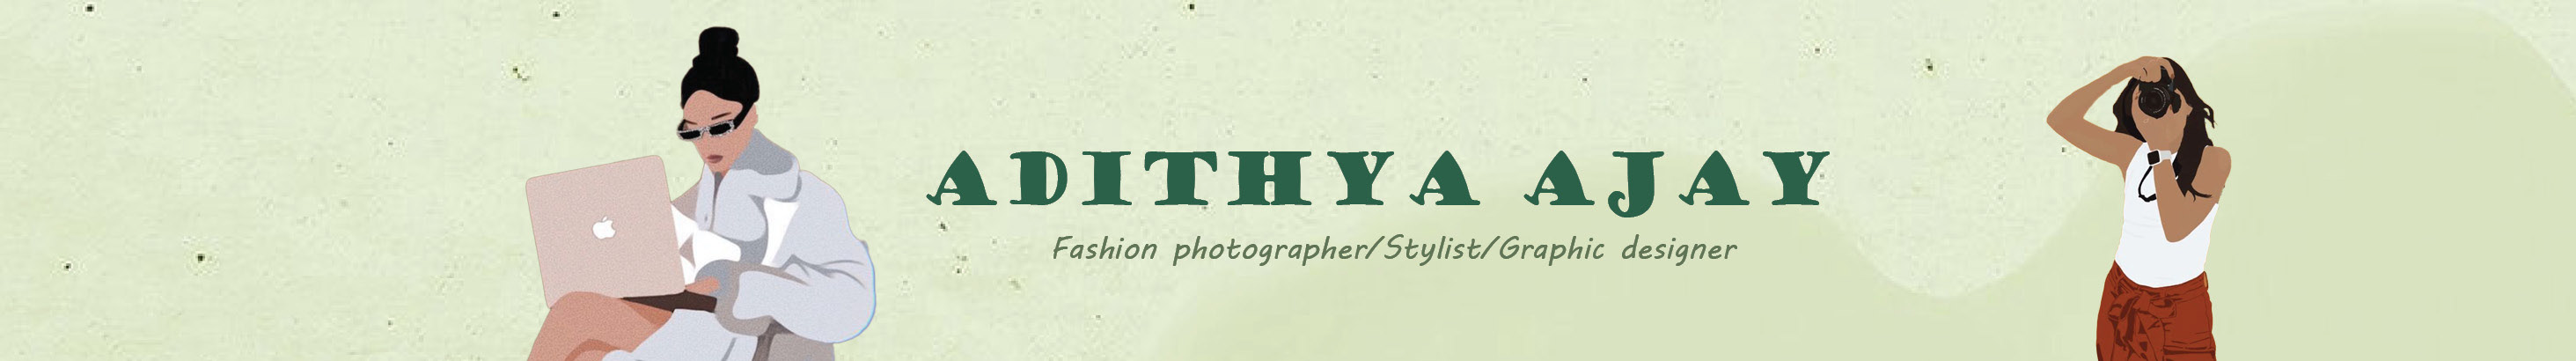 Adithya Ajay's profile banner